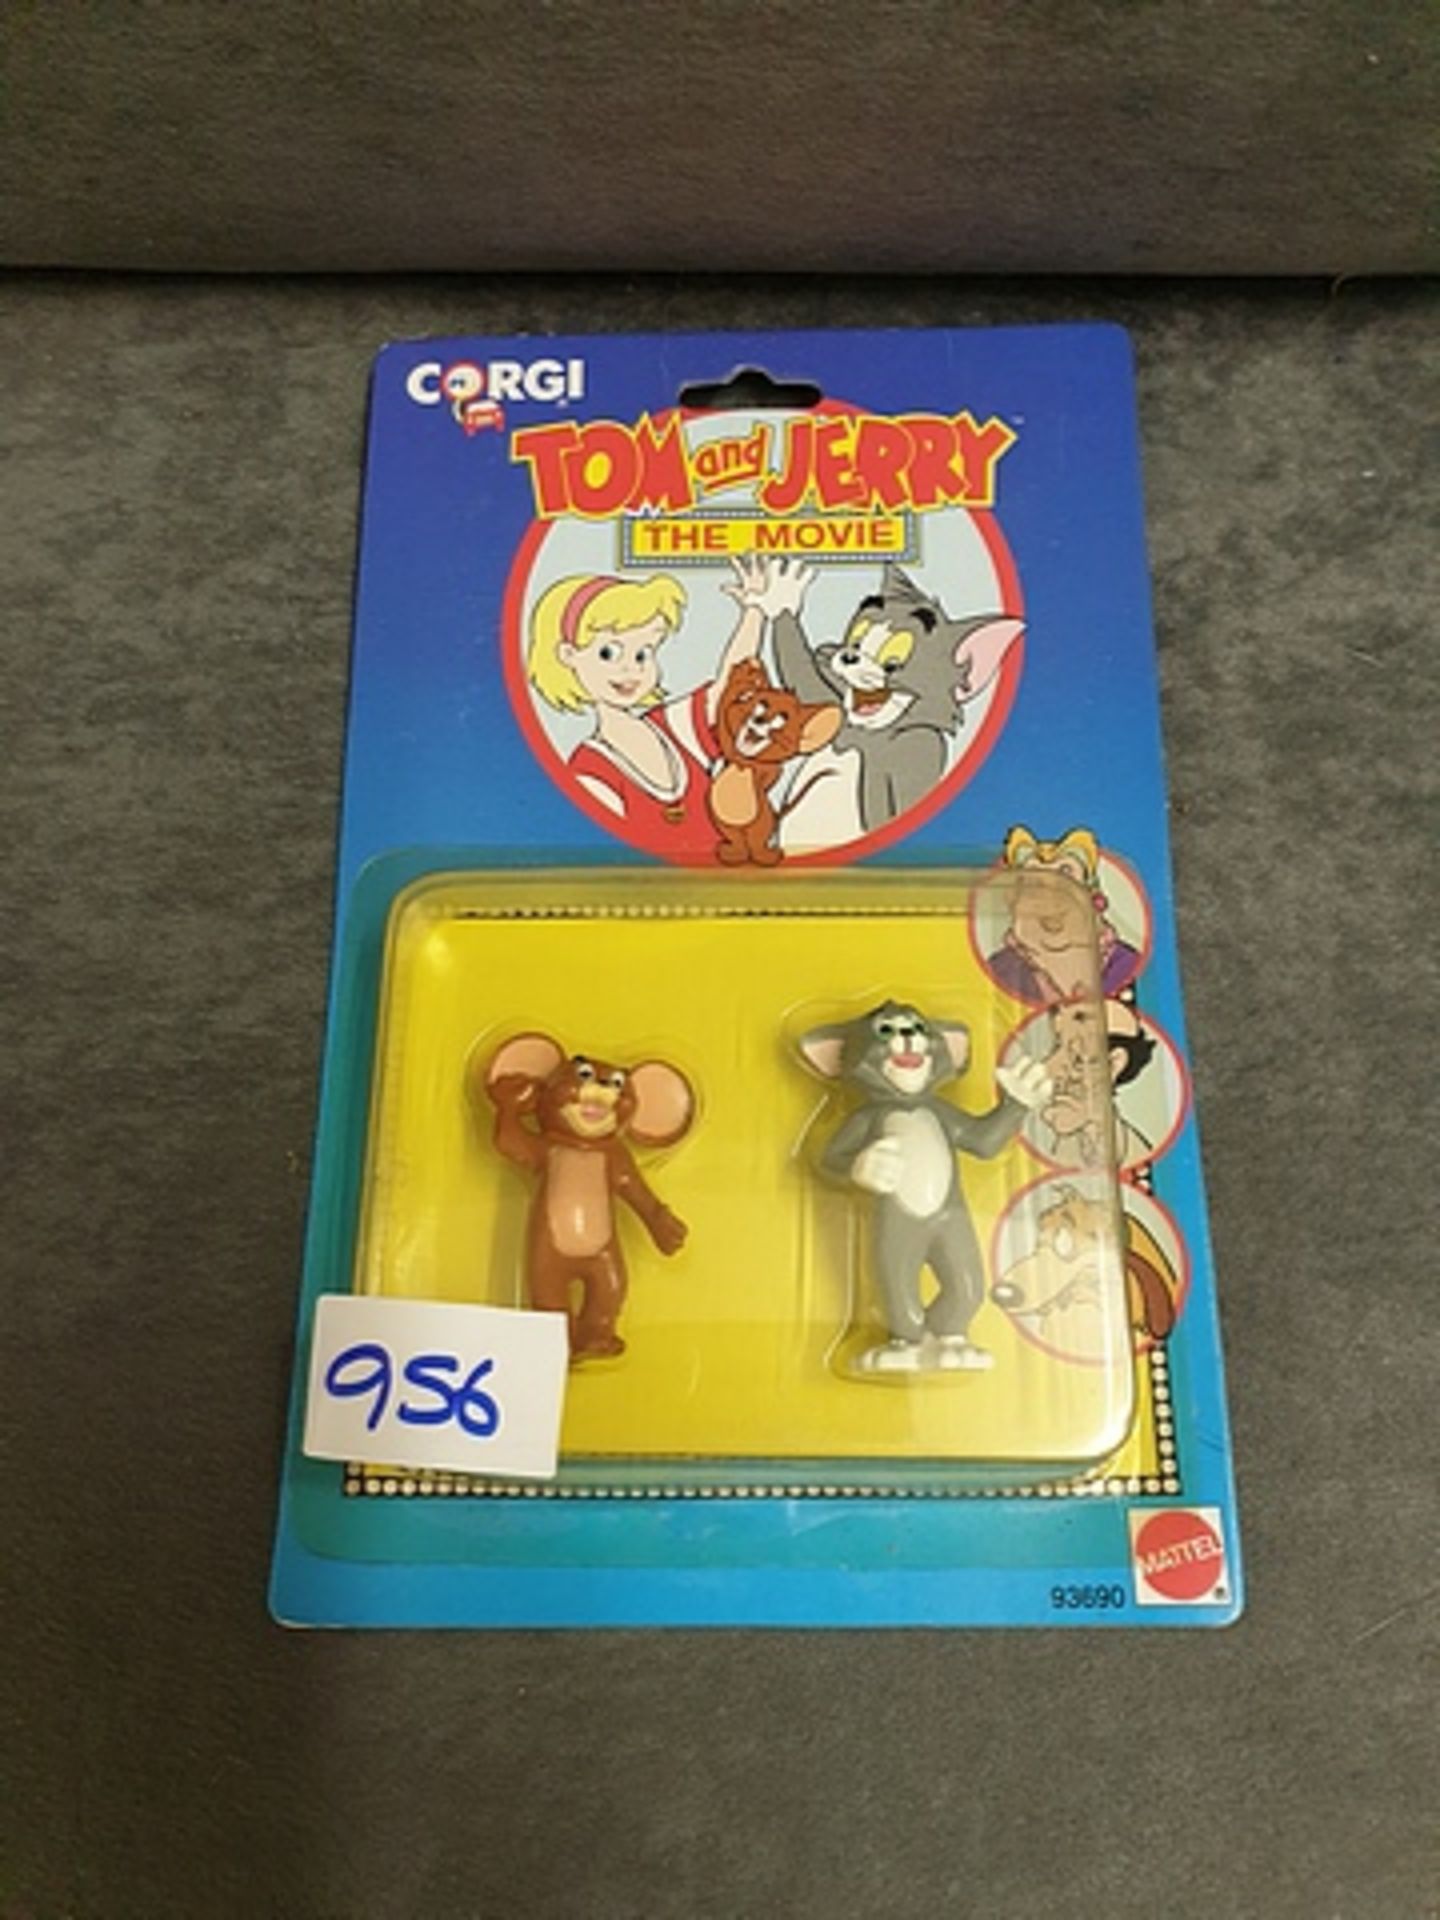 Corgi (93690) Tom And Jerry The Movie Figure Pack Sealed Mattel 1993 On Original Bubble Card